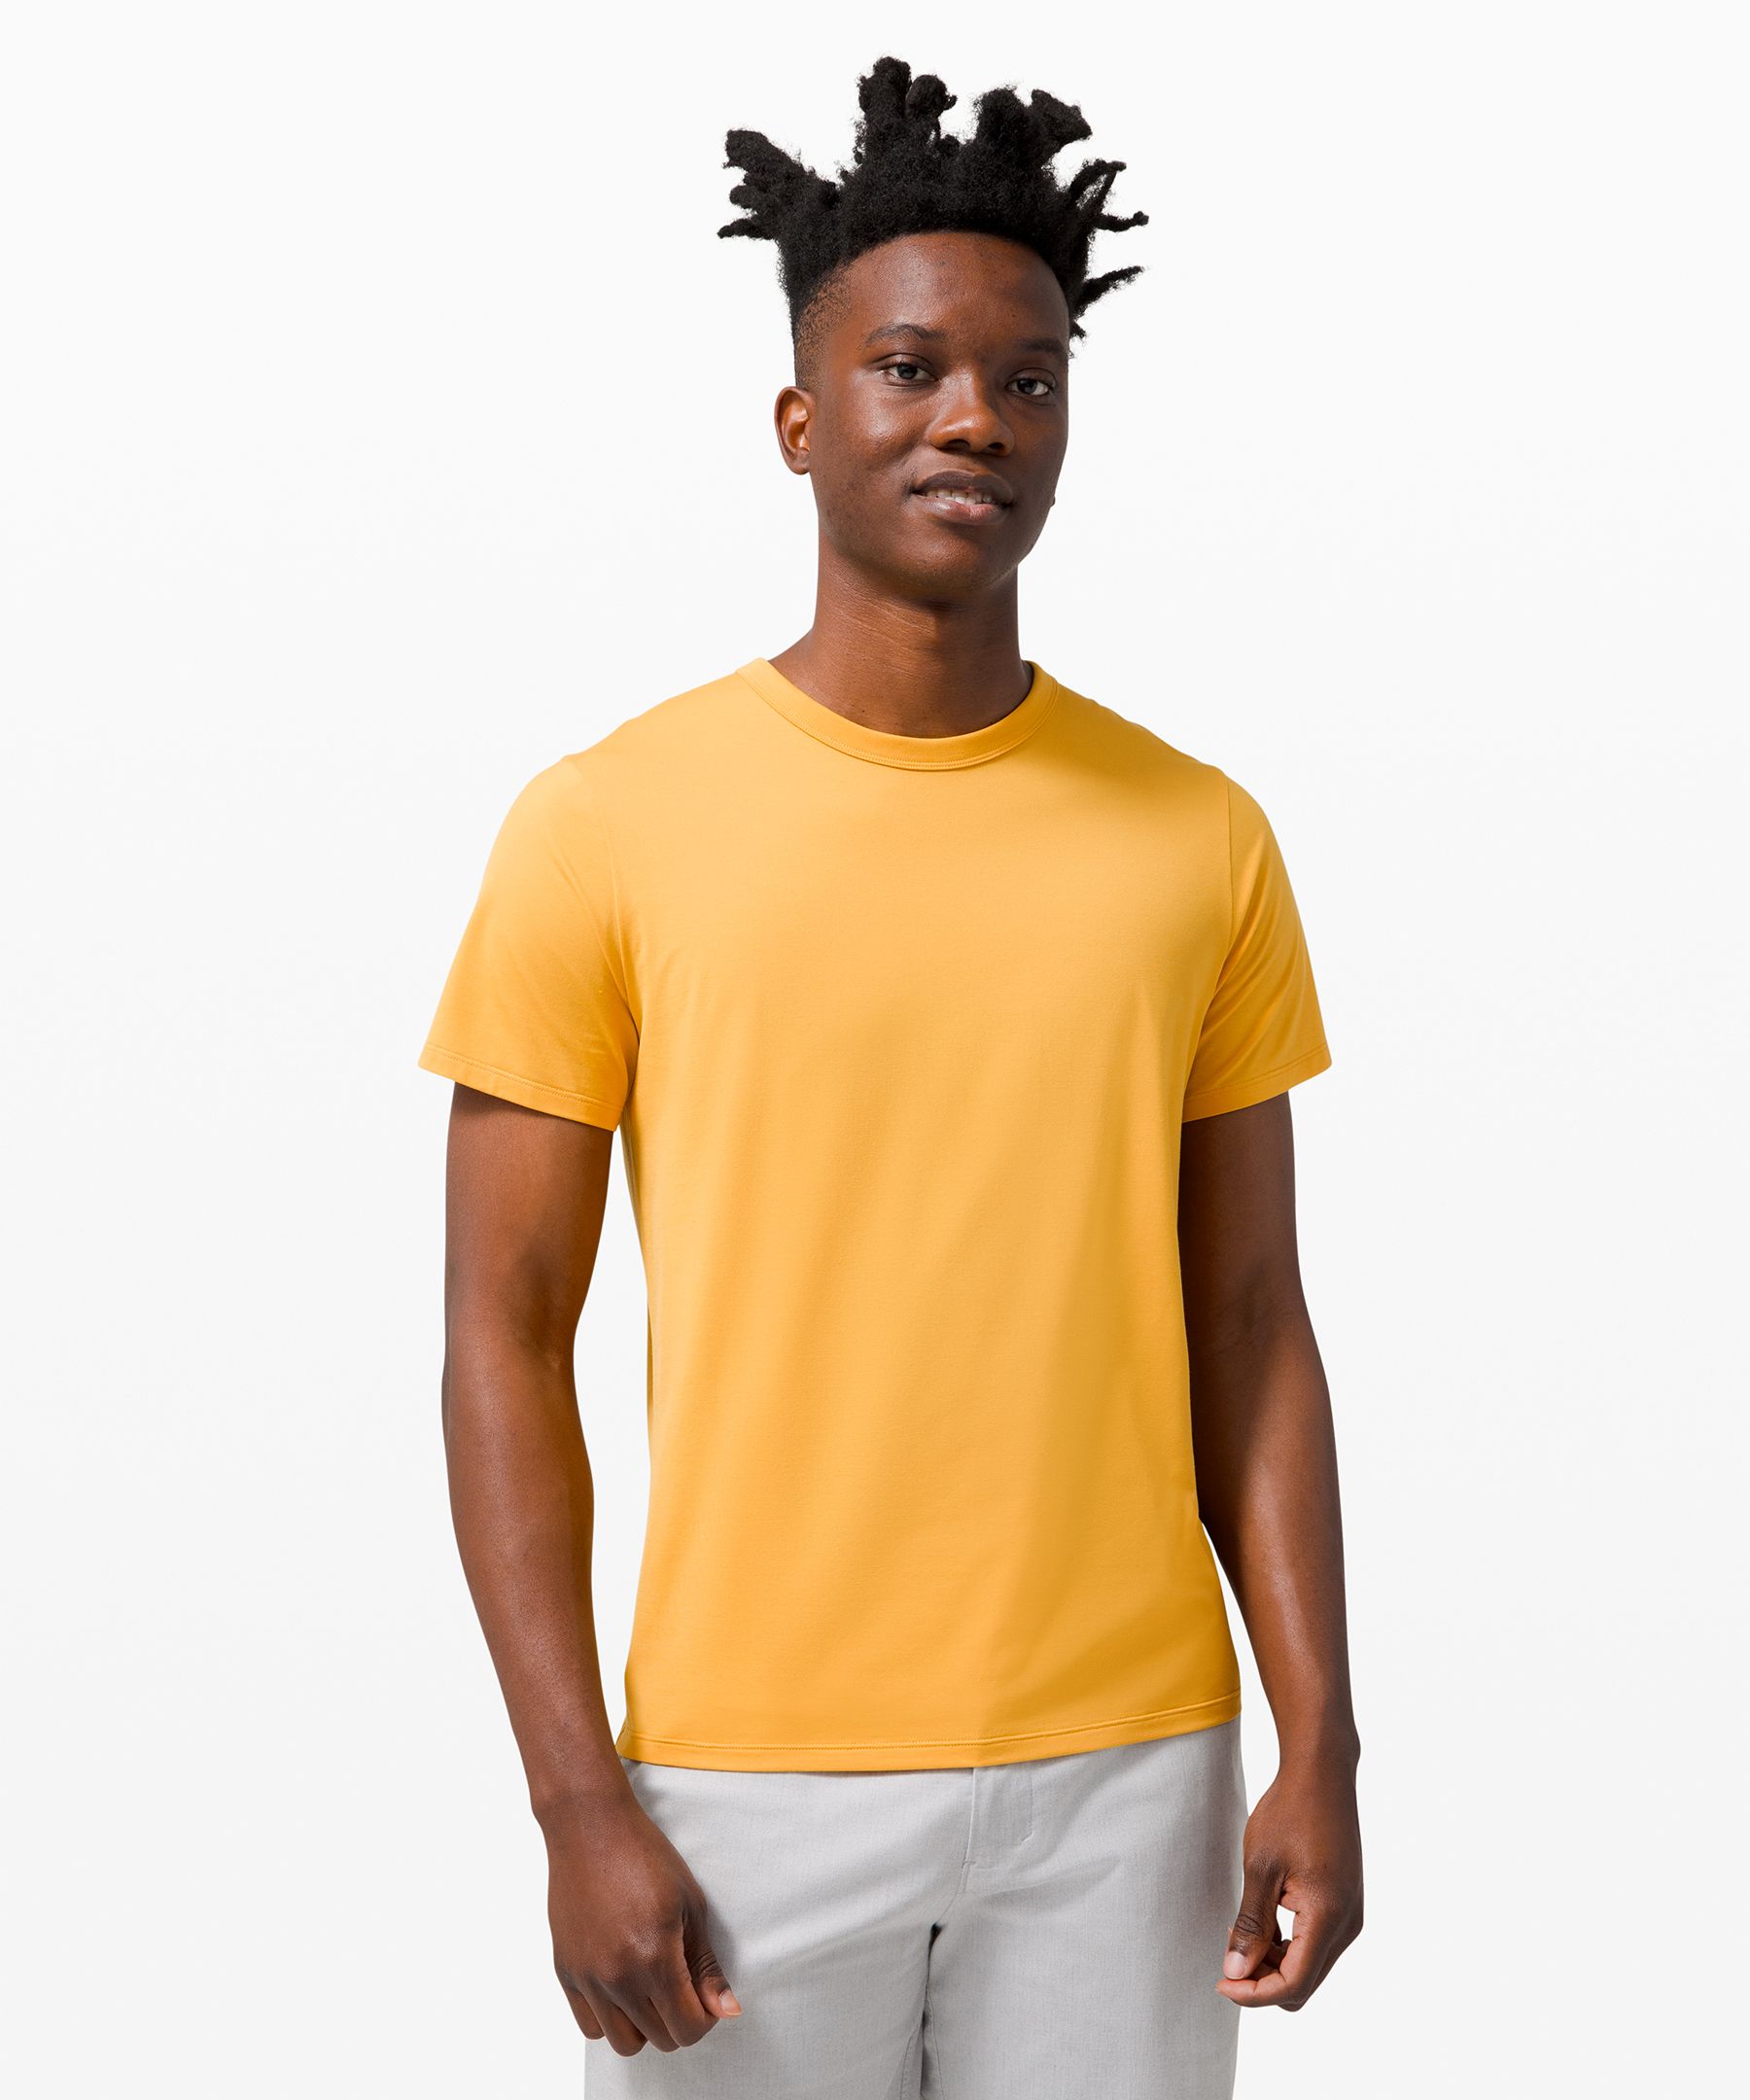 yellow lululemon shirt